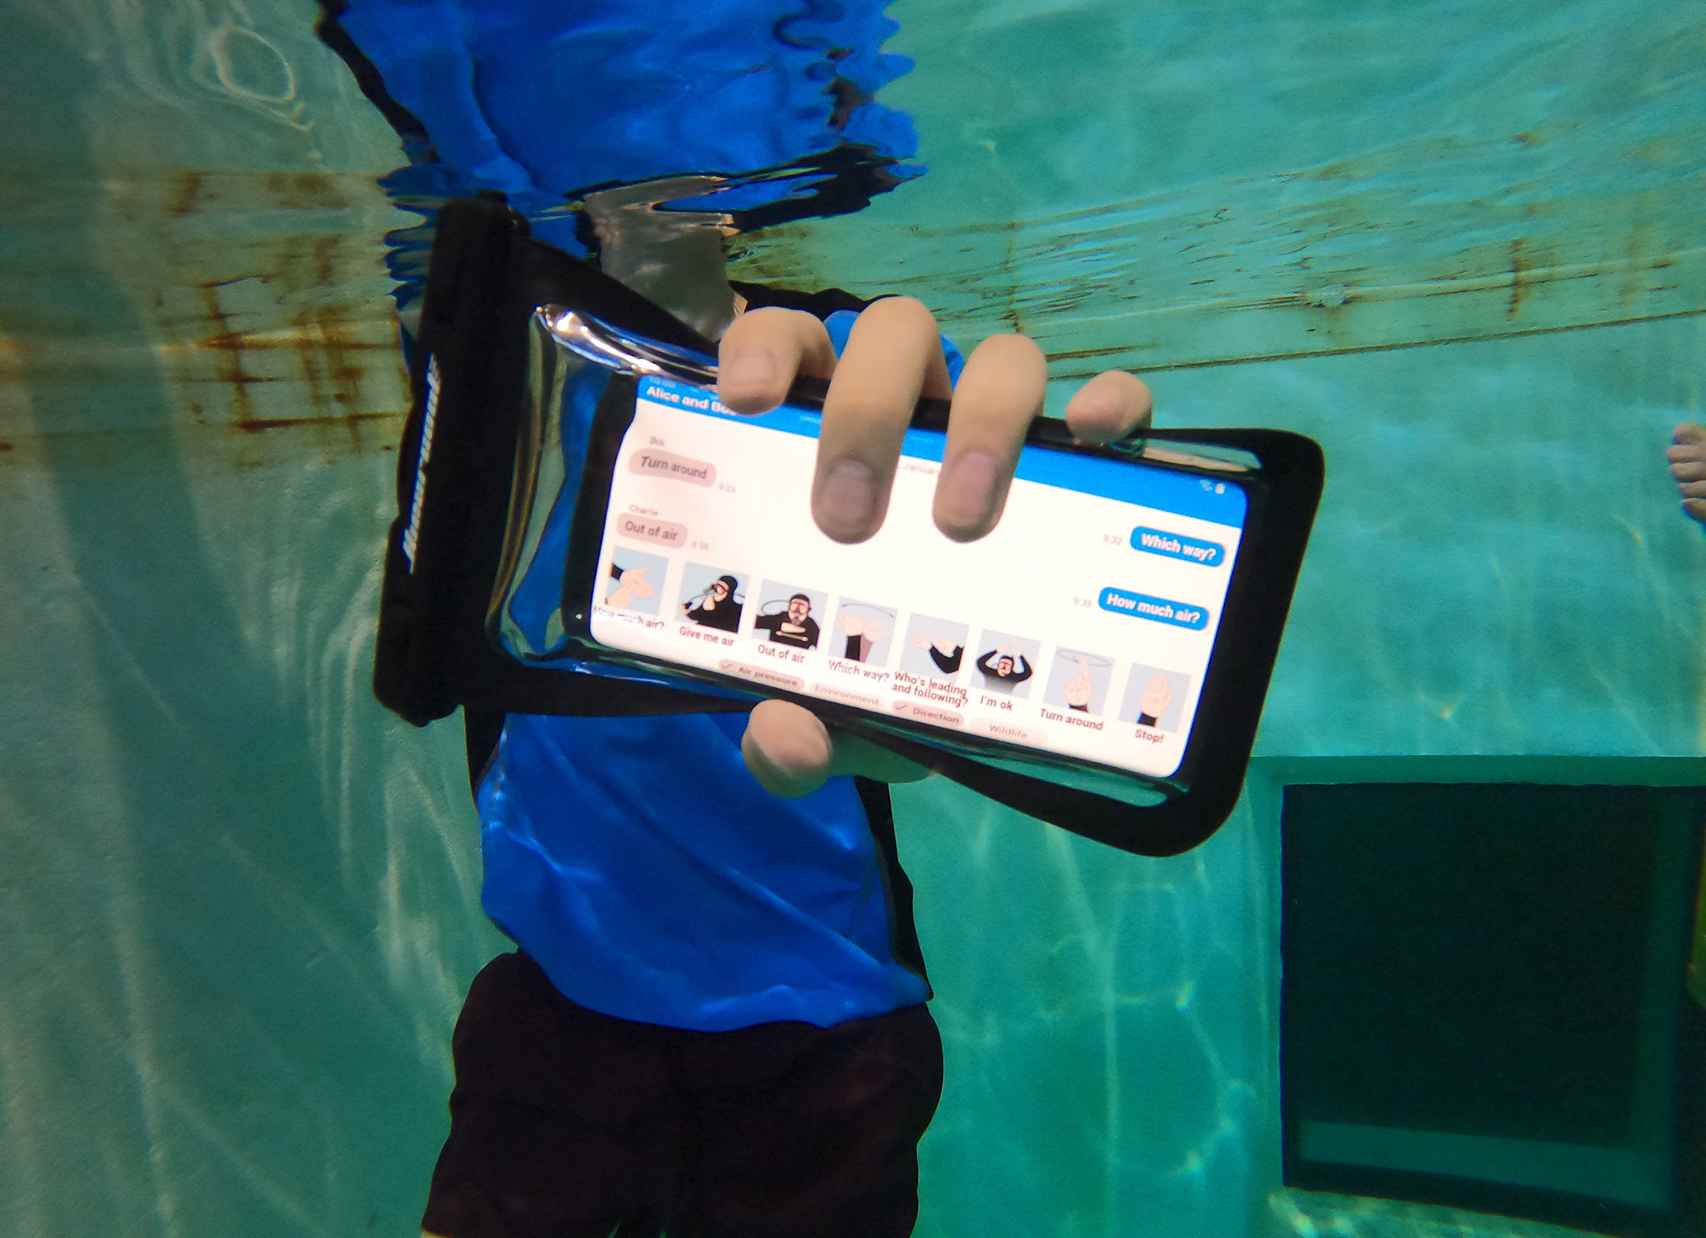 The app for communicating underwater